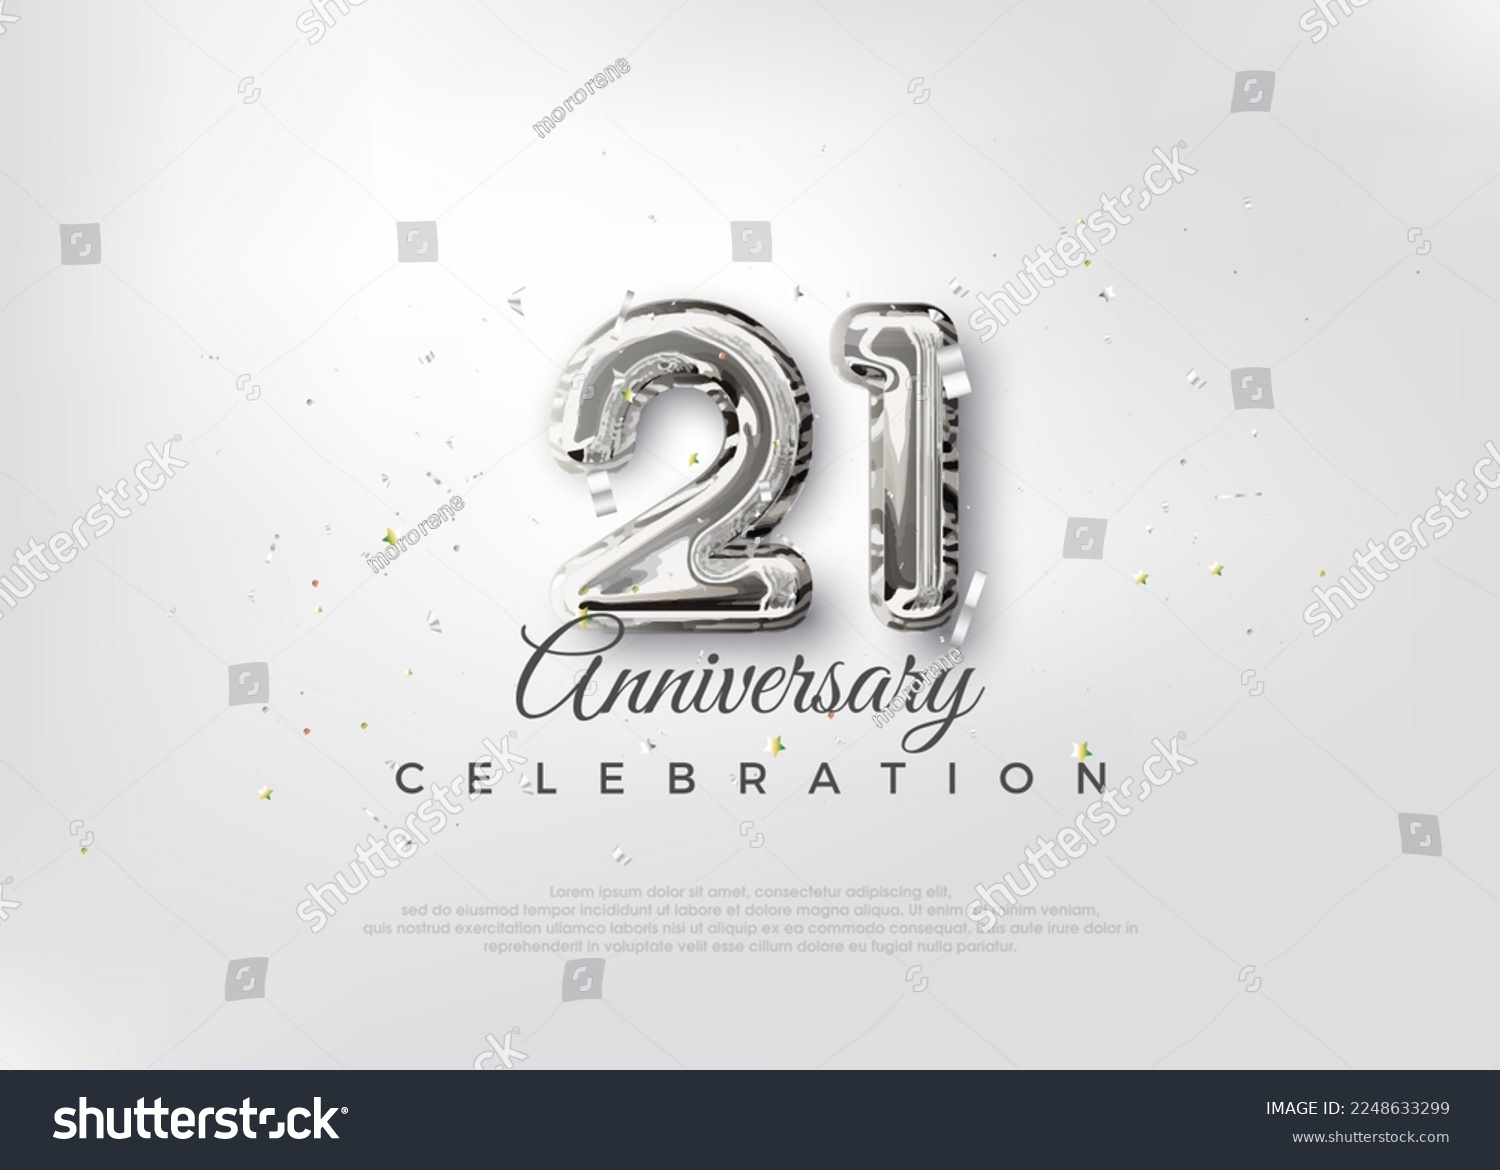 SVG of Silver balloon number. Premium vector 21st anniversary celebration background. svg